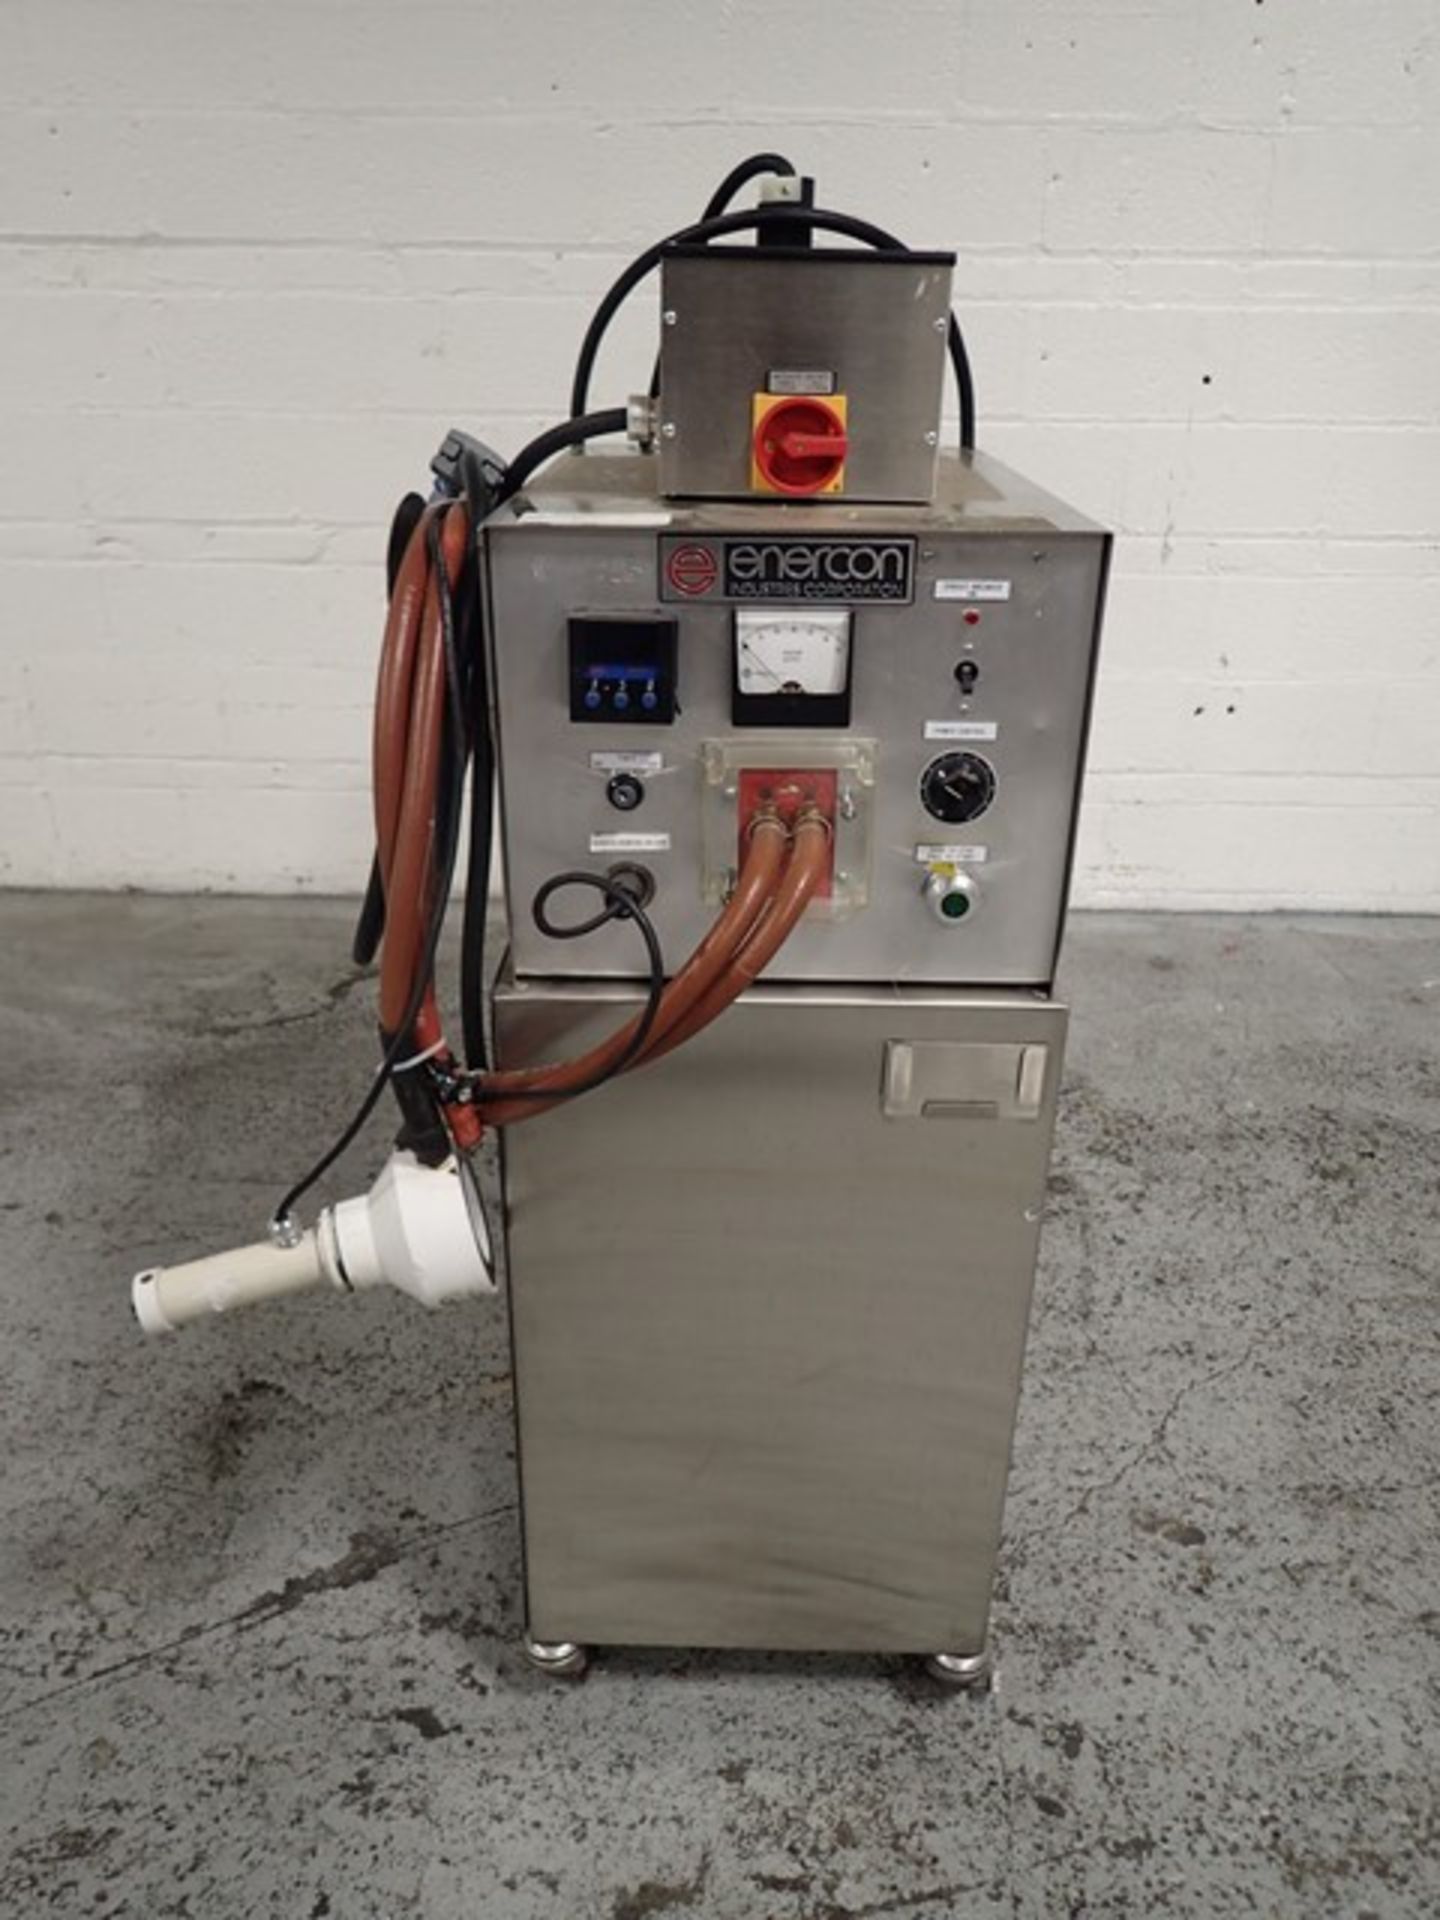 Enercon induction sealer, model 9340 - Image 3 of 8